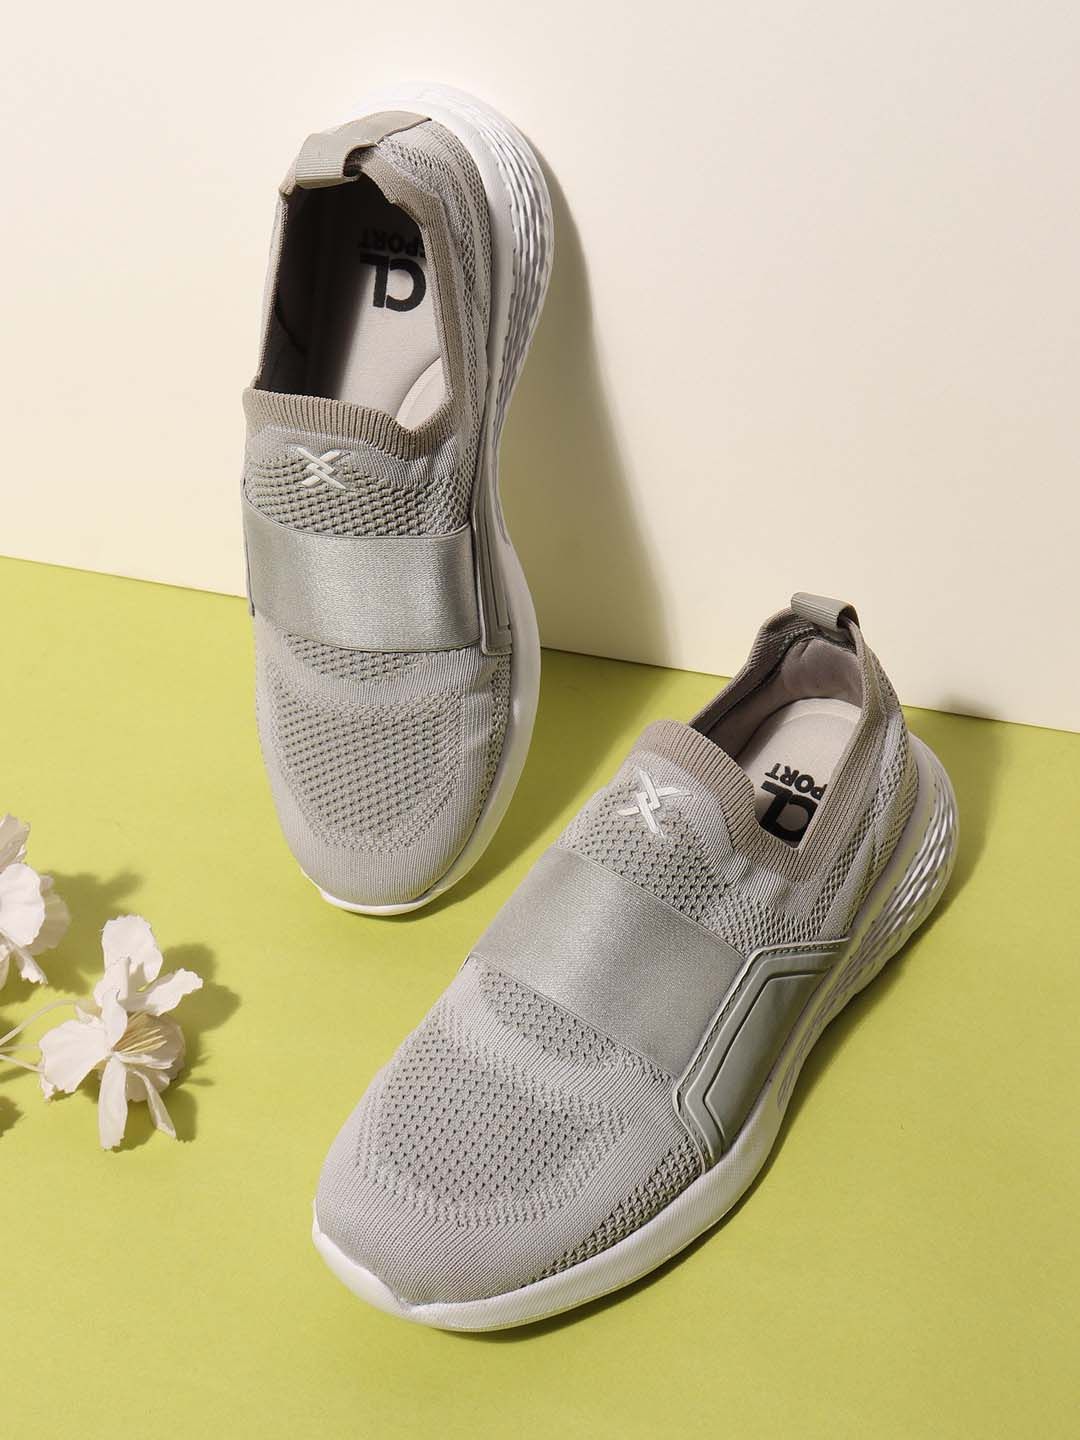 Carlton London sports Women Grey Textured Slip-On Sneakers Price in India